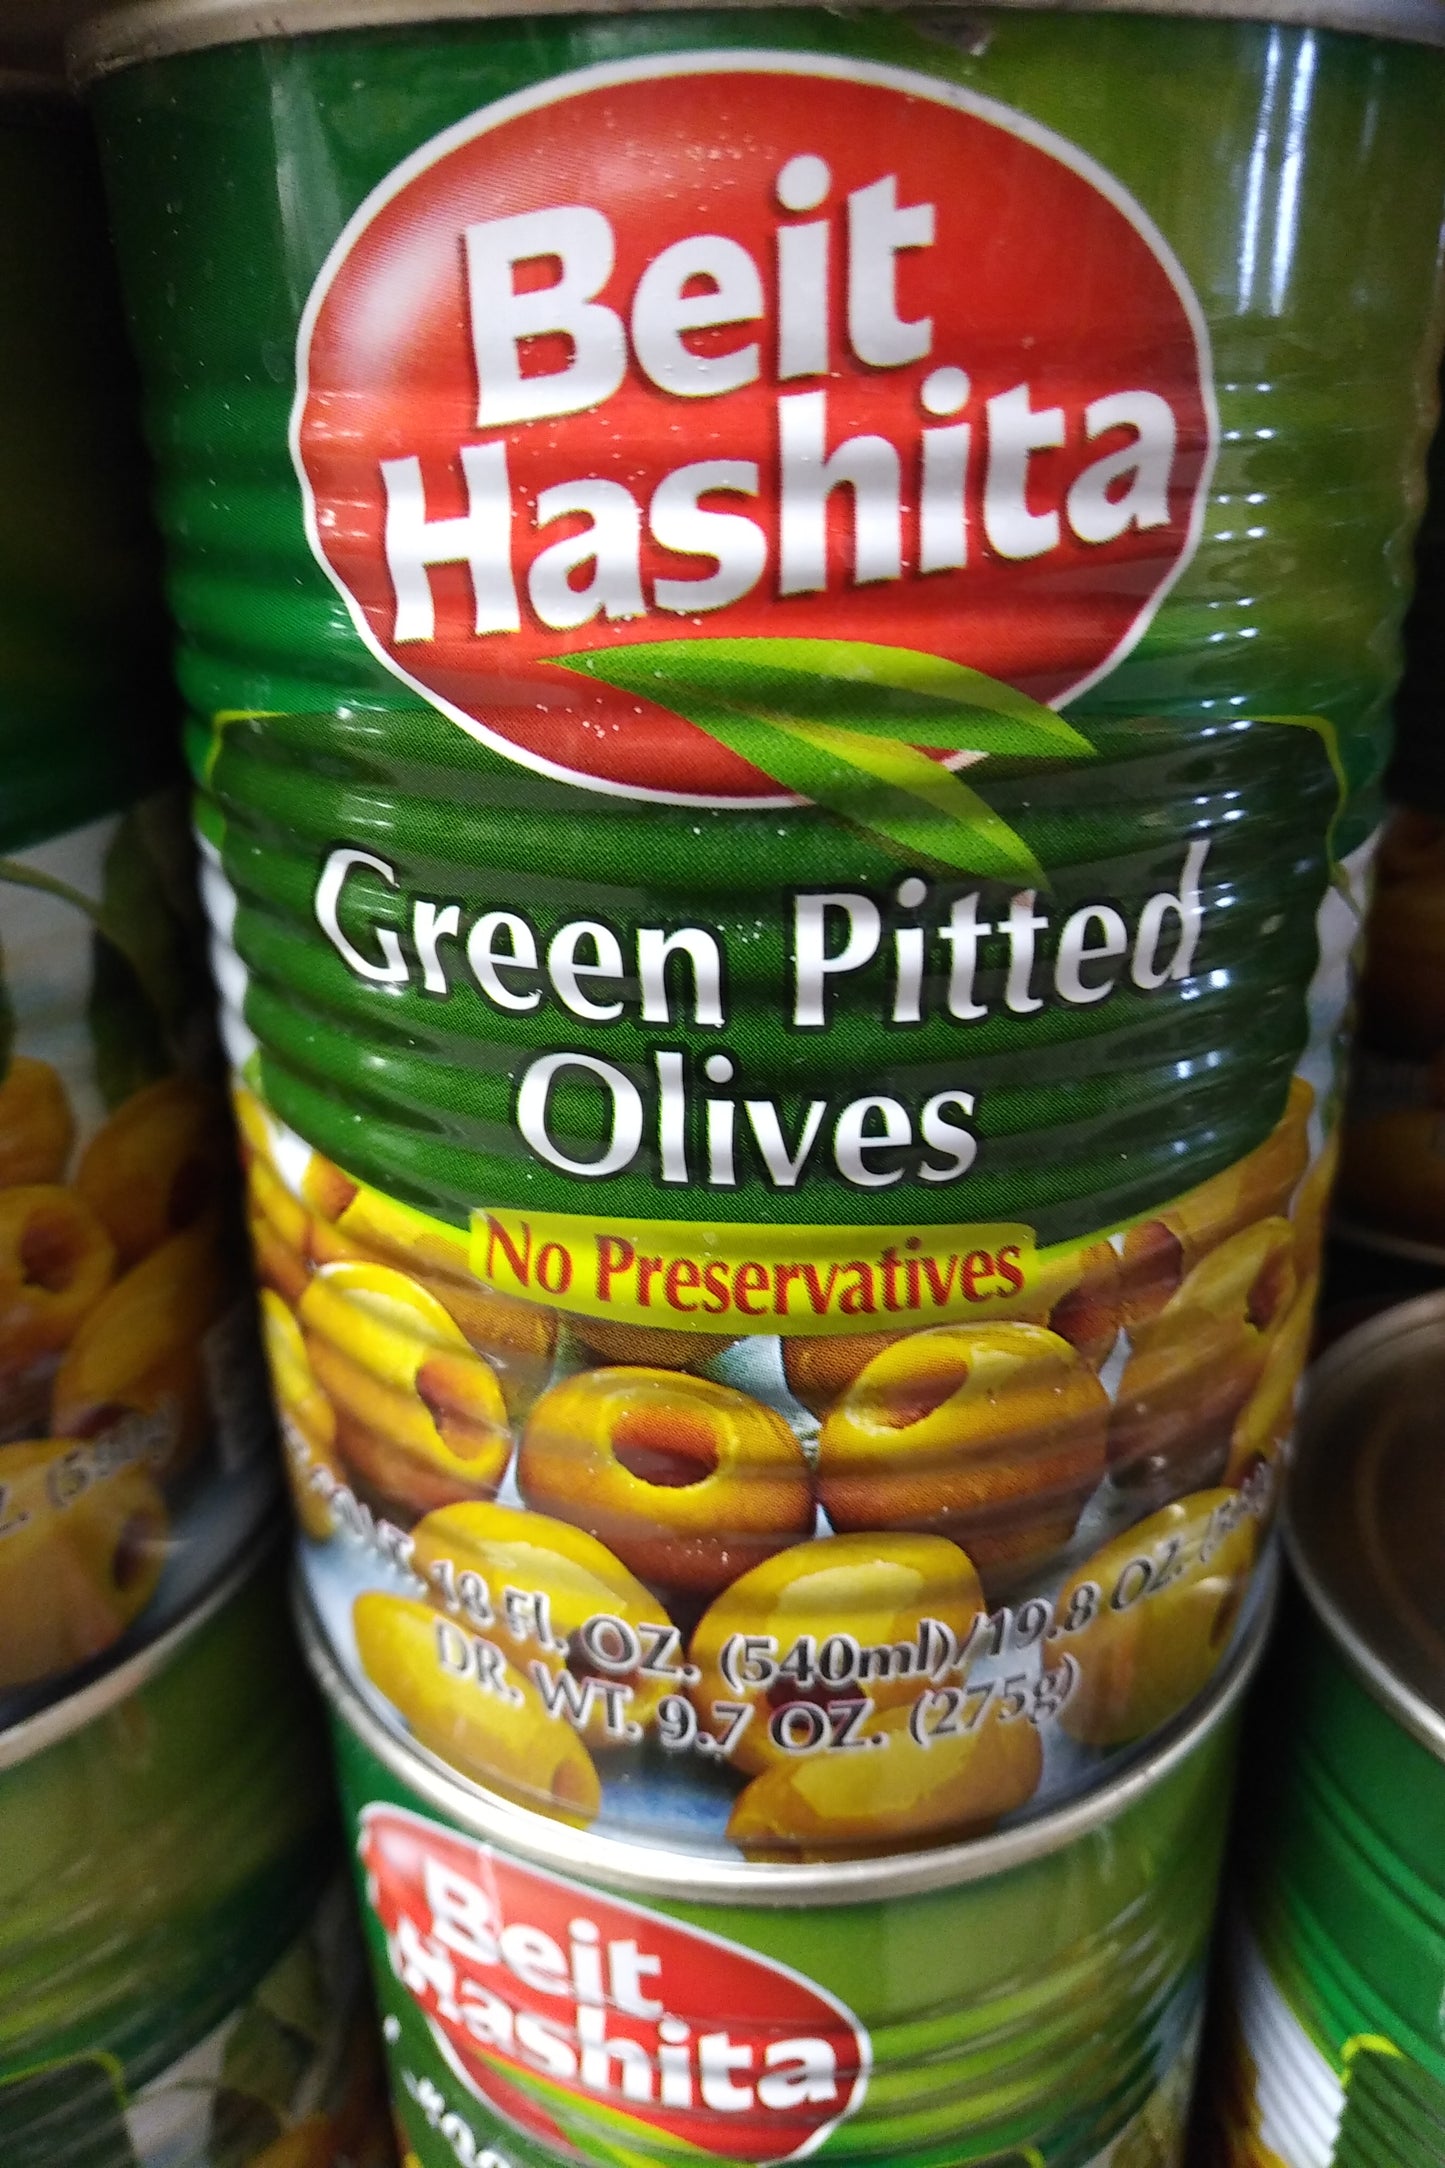 Beit Hashita Green Pitted Olives 19.8oz